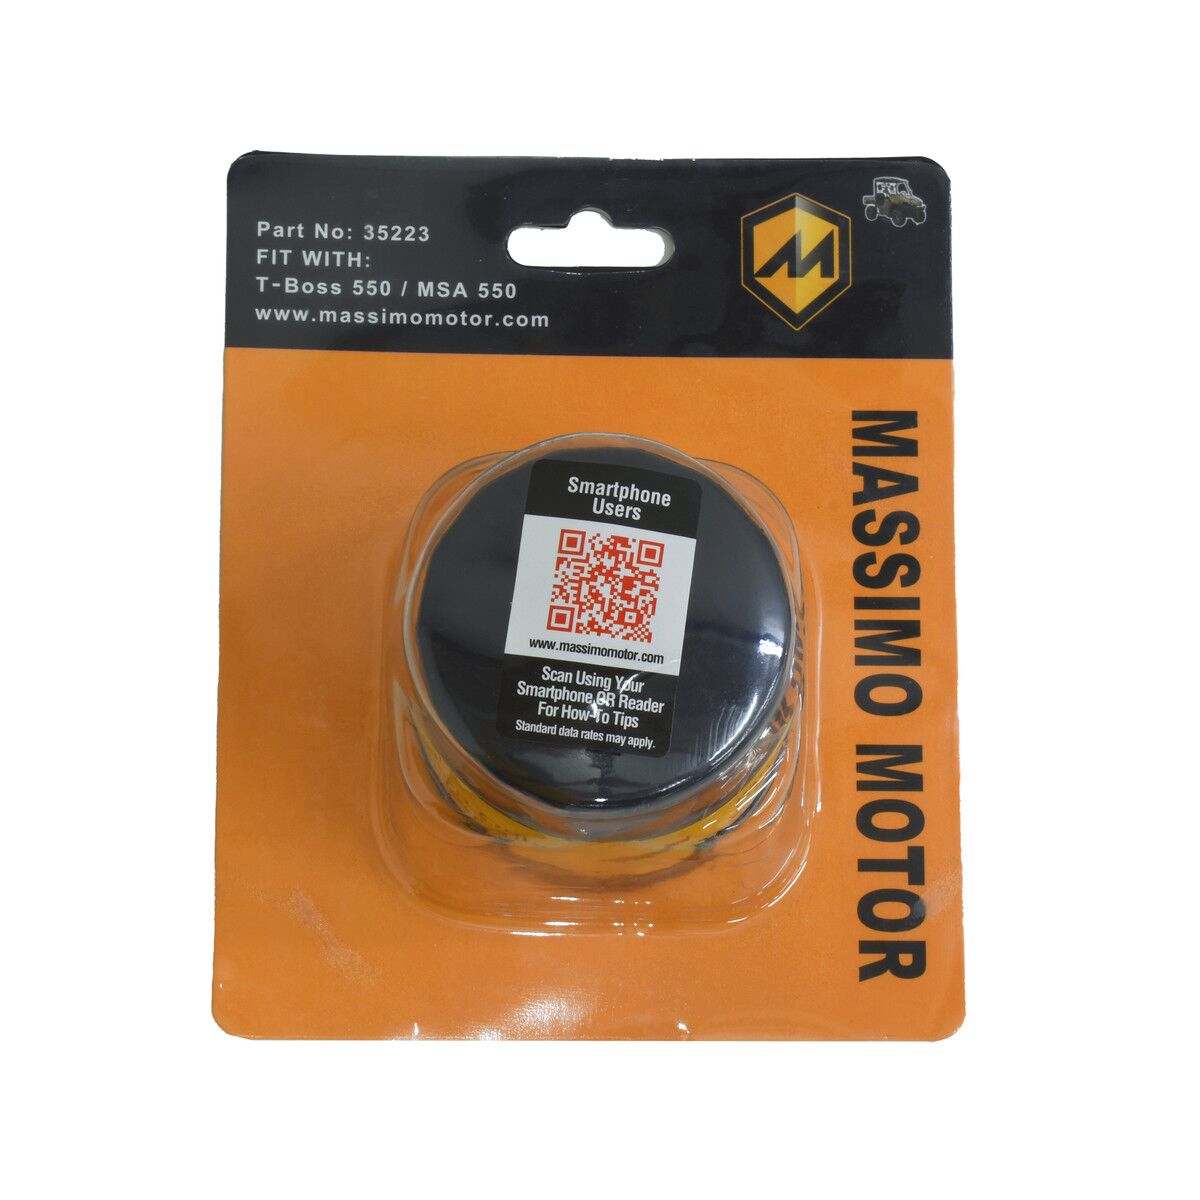 35223 Massimo Motor Oil Filter - T-Boss 550 / MSA 550